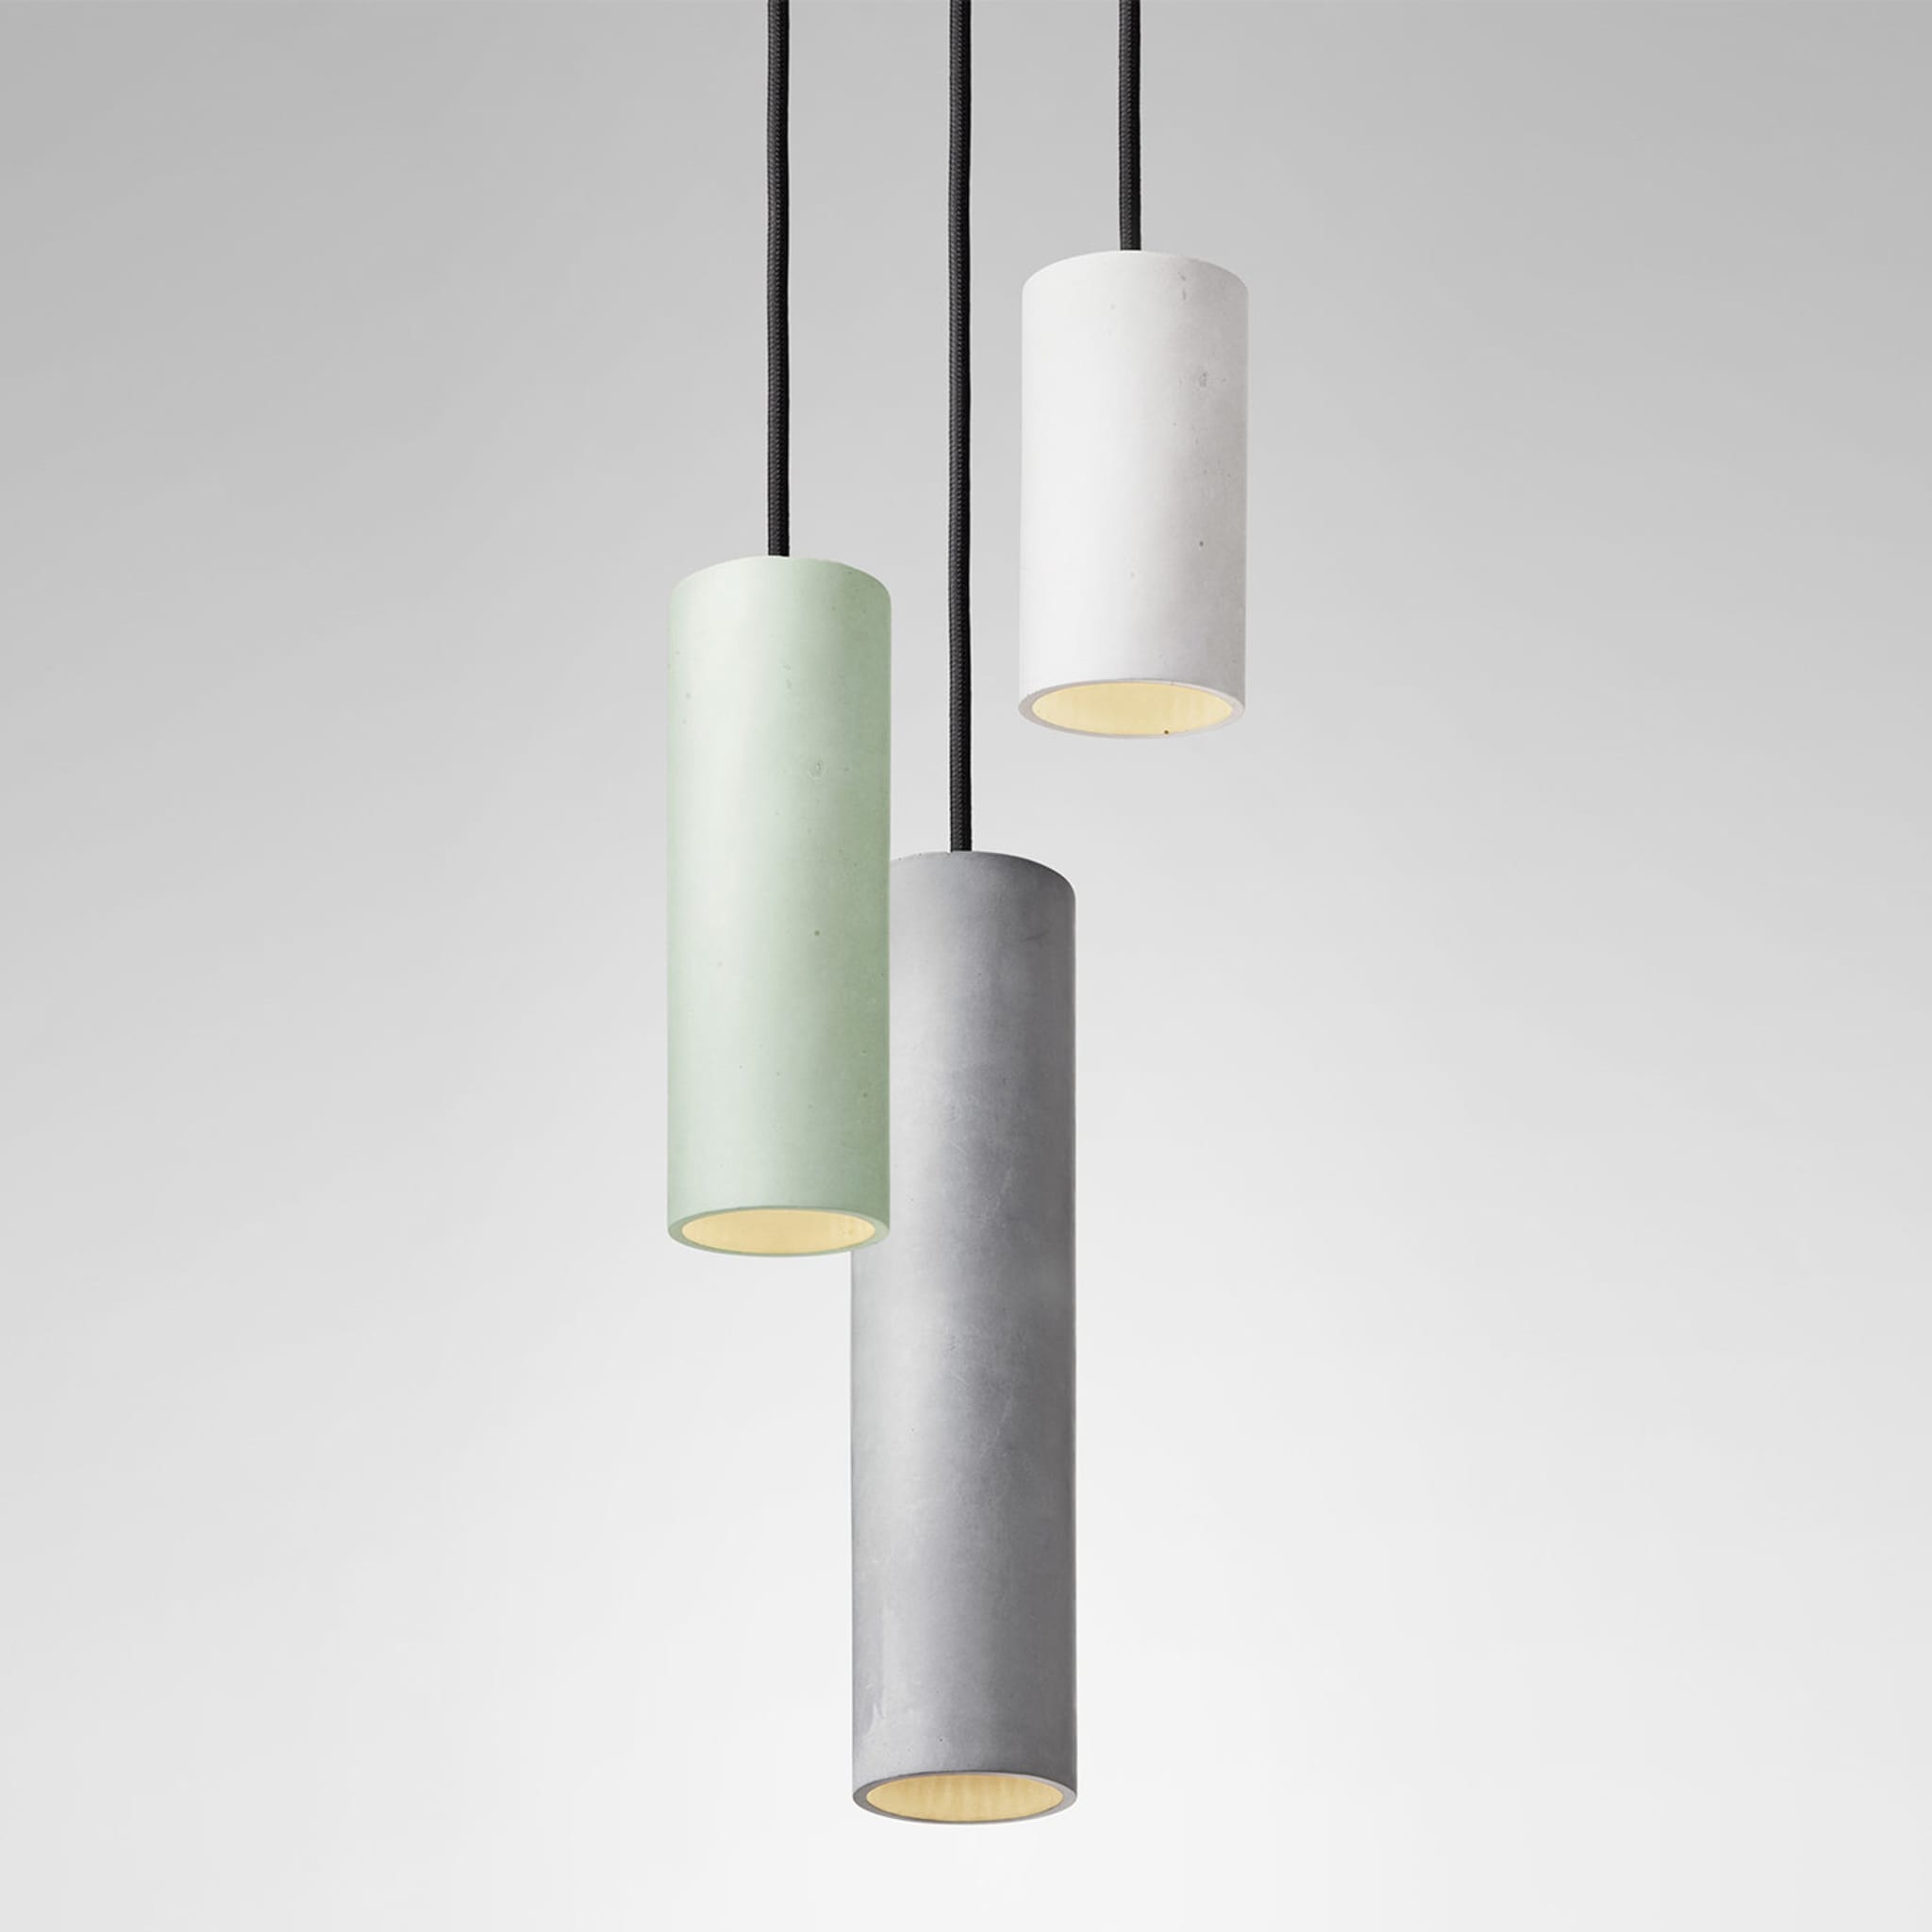 Cromia Small Ivory Pendant Lamp - Alternative view 1